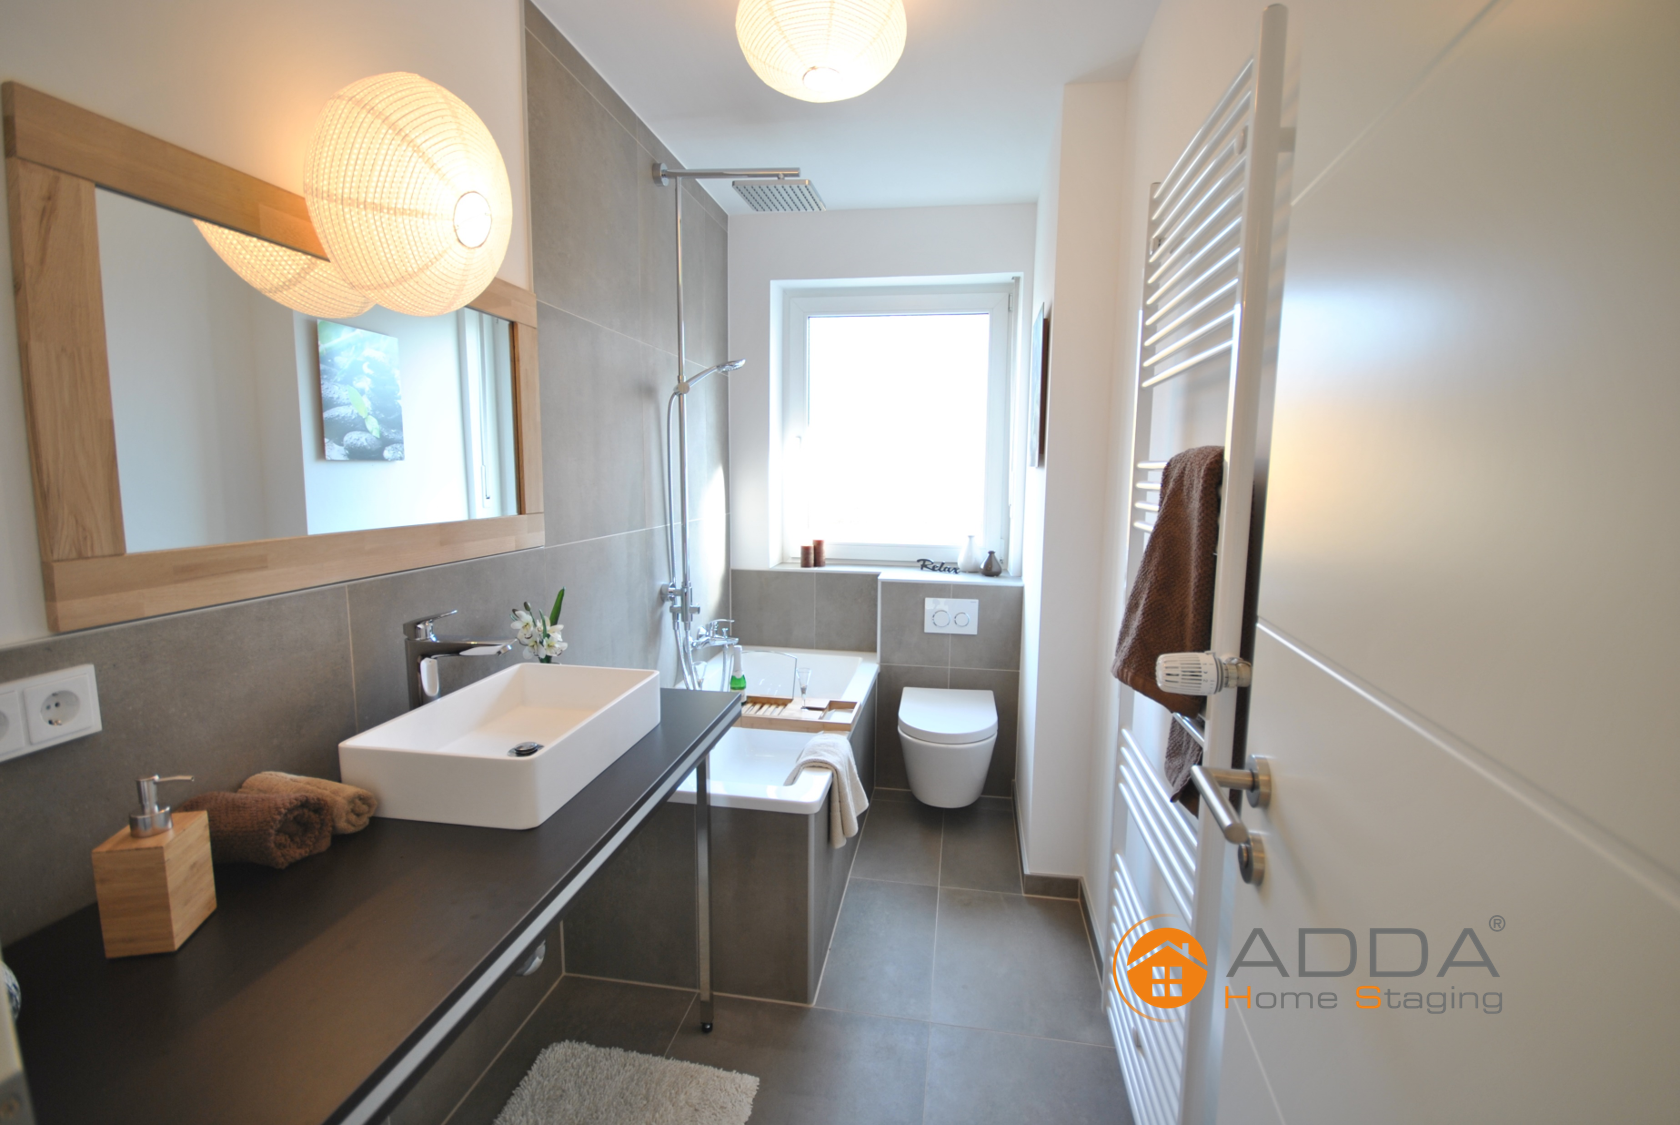 Badezimmer nach ADDA Homestaging #badezimmer #raumgestaltung ©ADDA Homestaging